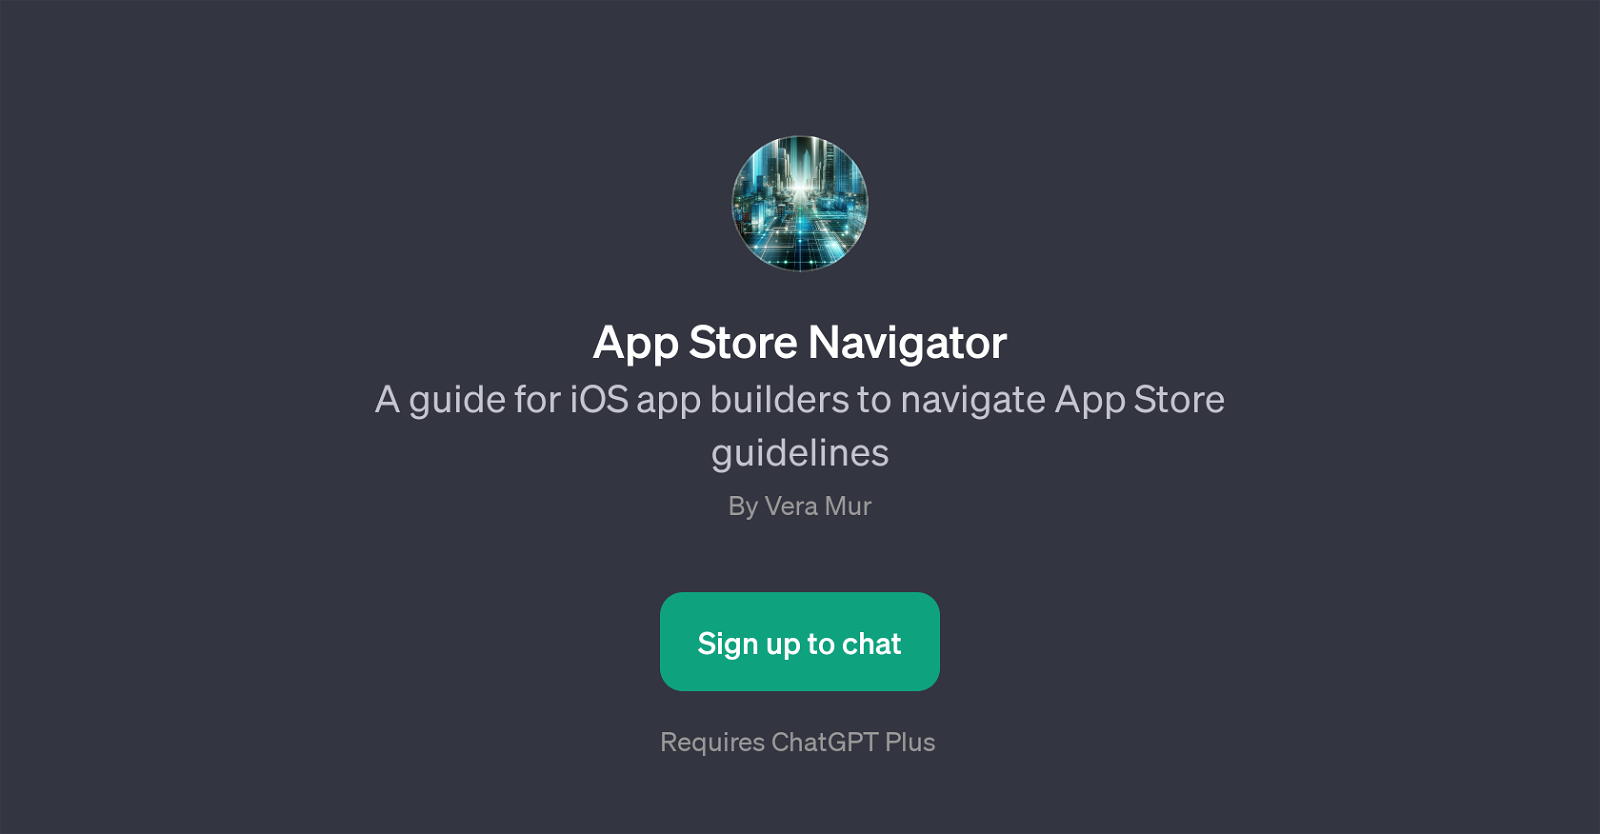 App Store Navigator website